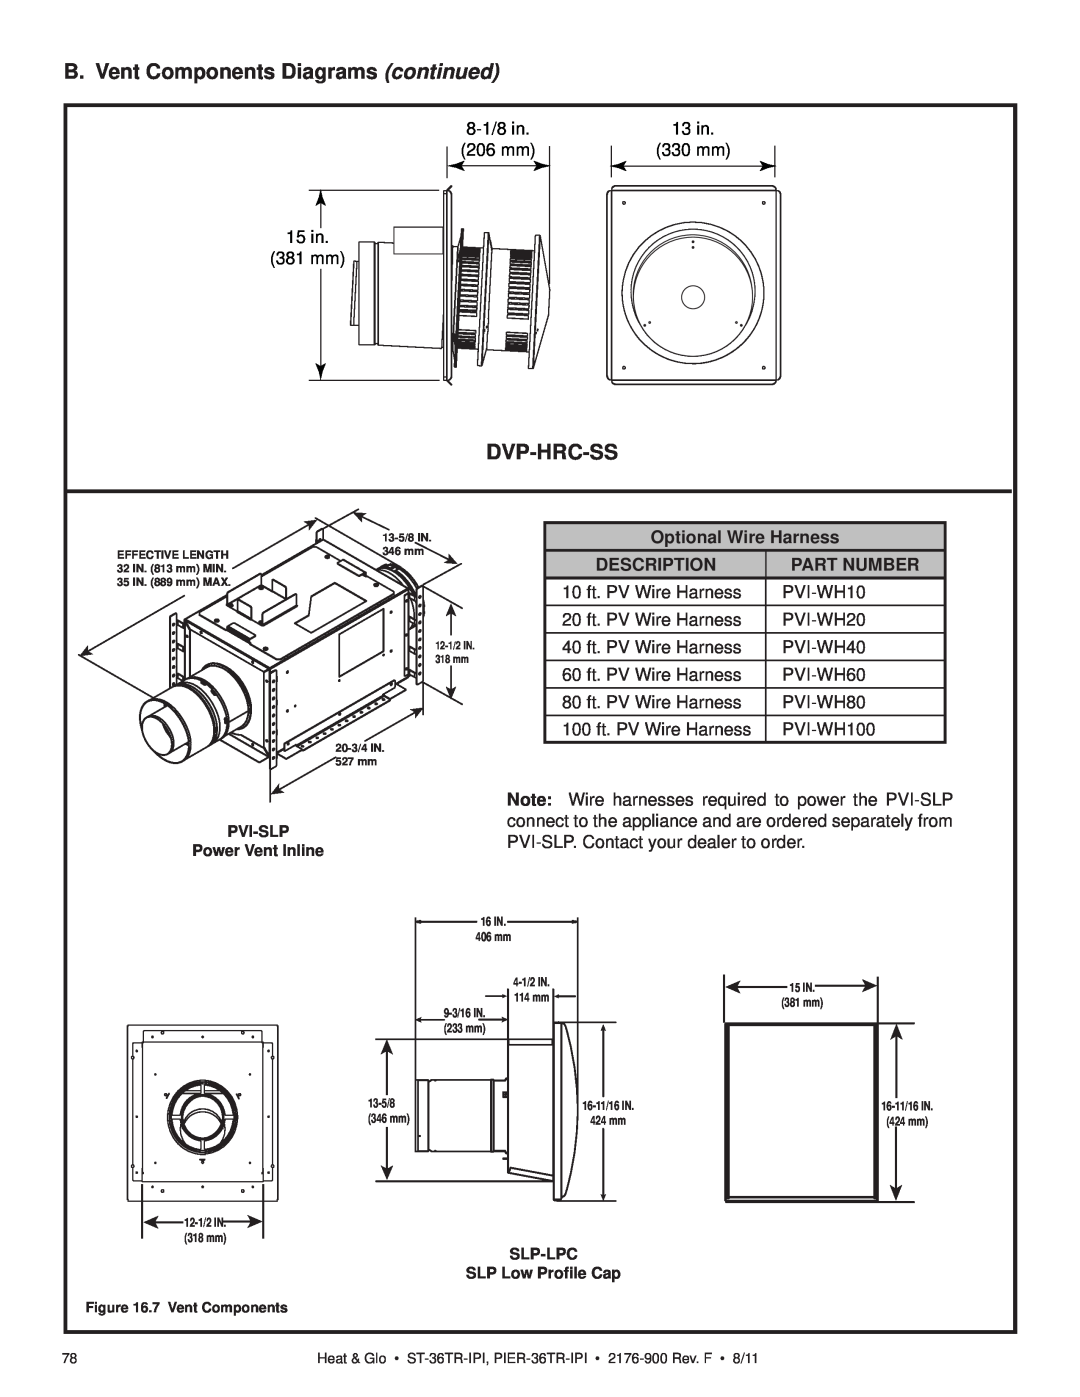 Heat & Glo LifeStyle ST-36TRLP-IPI Dvp-Hrc-Ss, B. Vent Components Diagrams continued, Optional Wire Harness, Description 